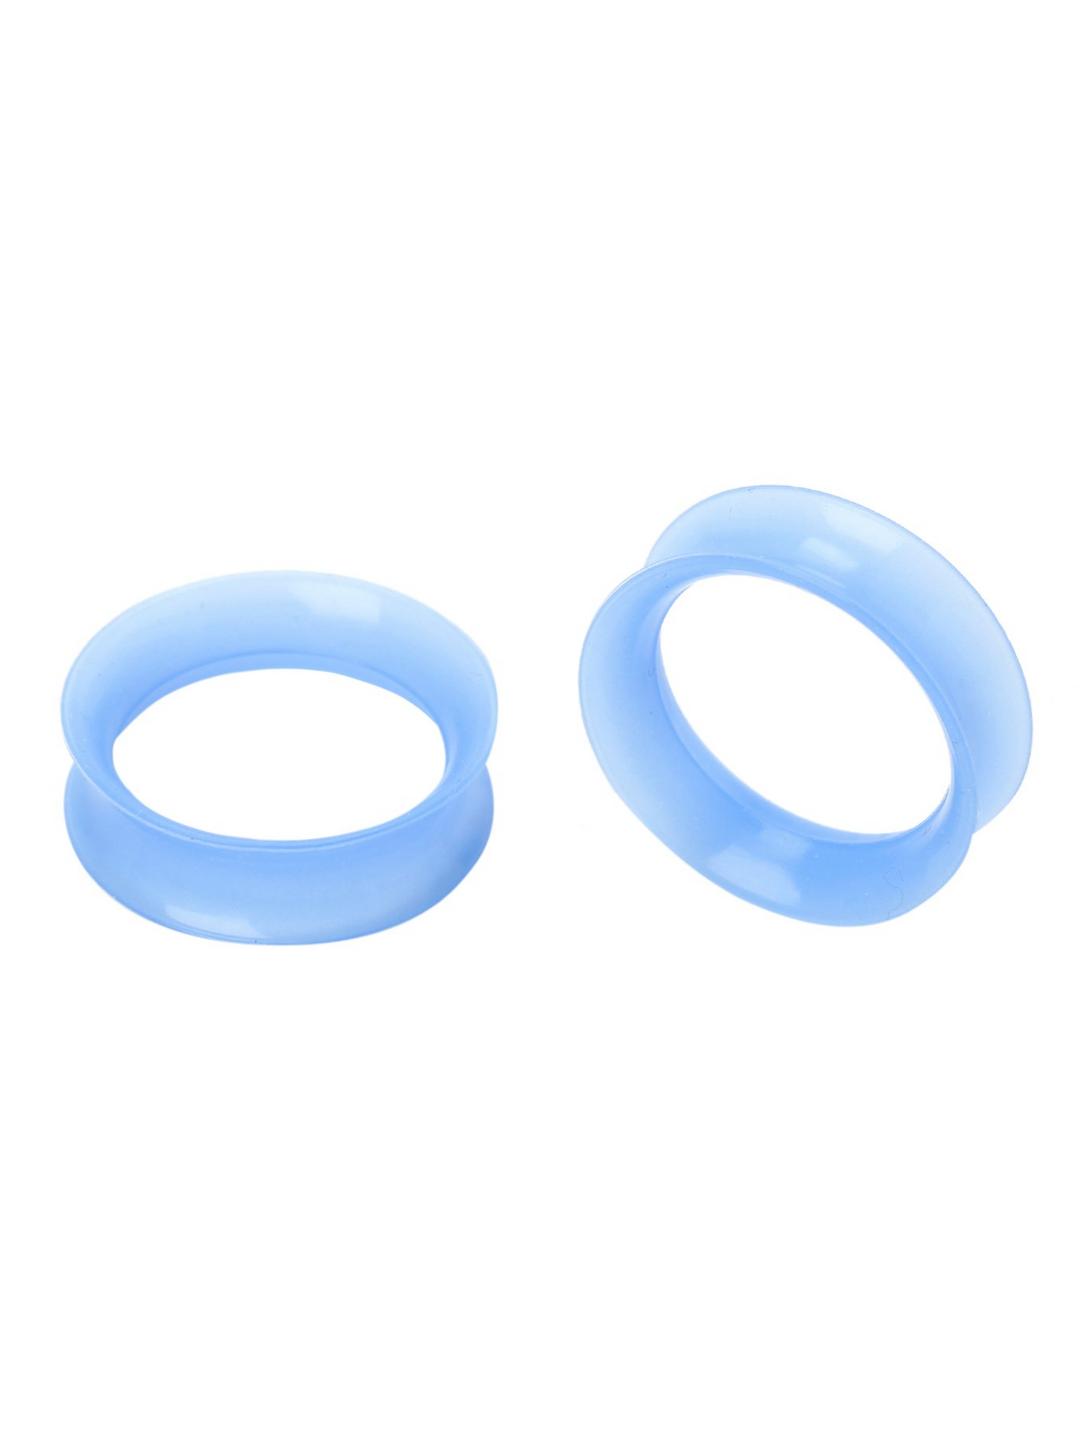 Glow Blue Silicone Eyelet Plugs 2 Pack, MULTI, hi-res